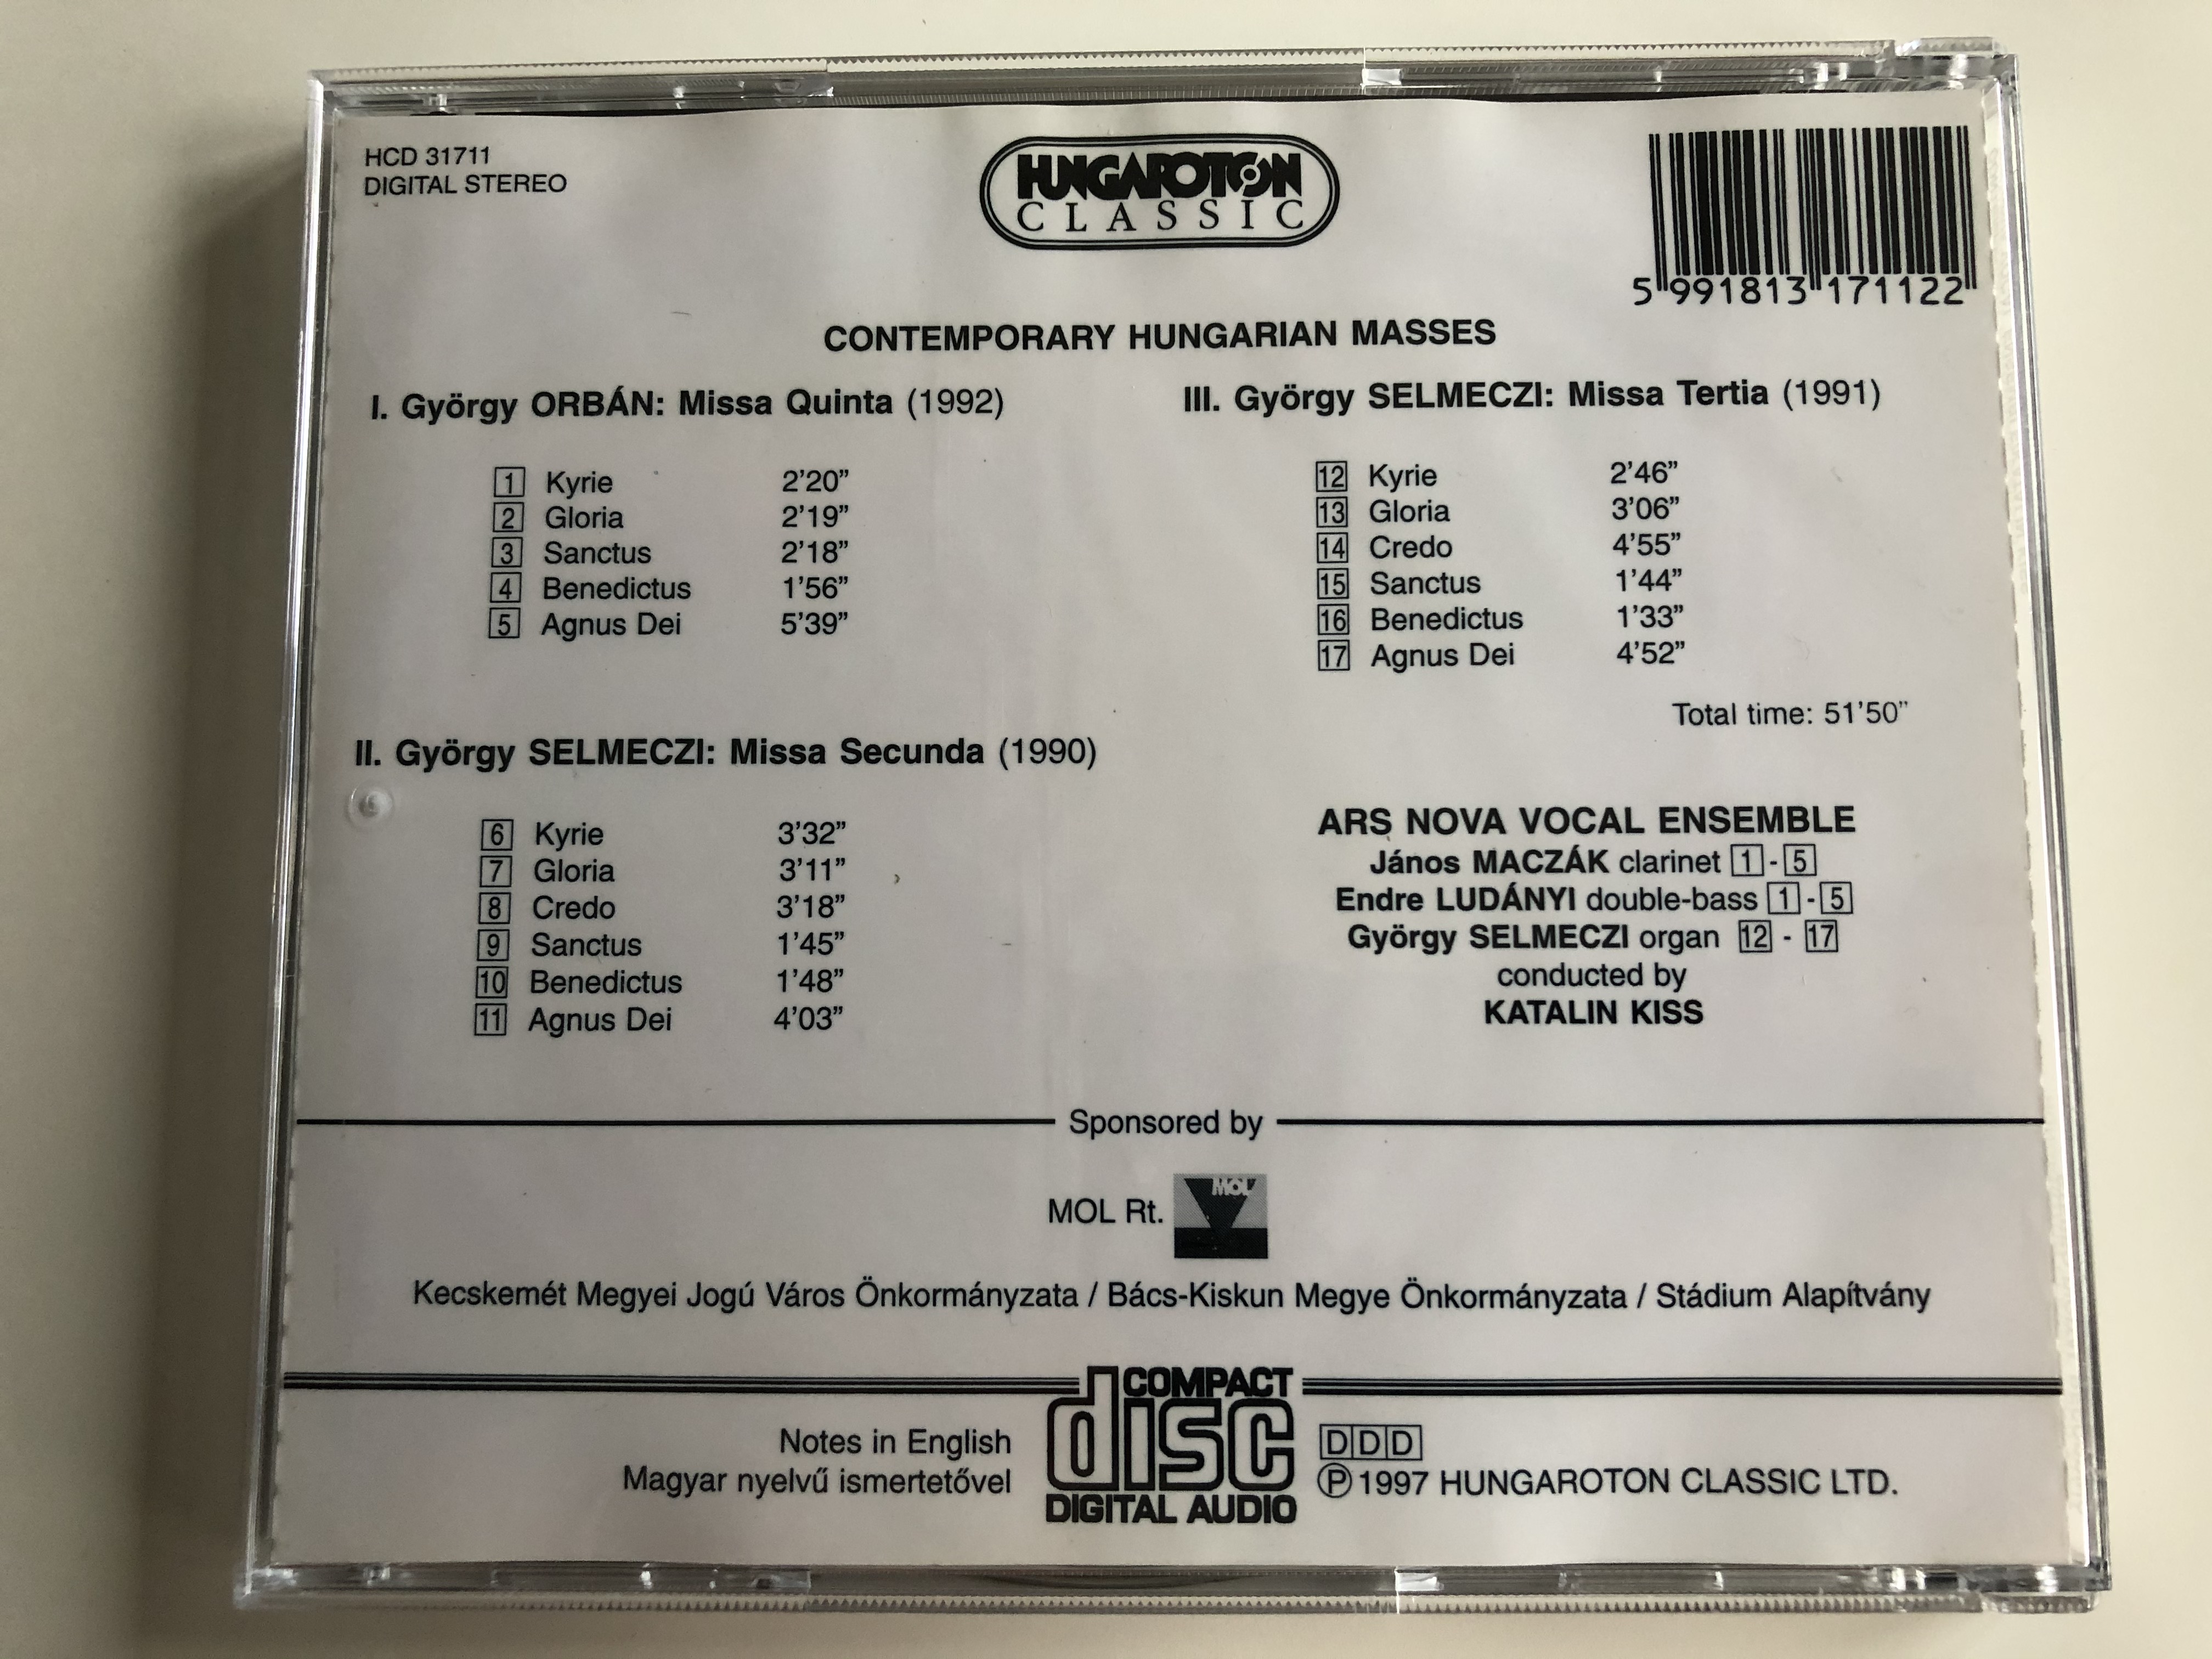 orb-n-selmeczi-contemporary-hungarian-masses-ars-nova-vocal-ensemble-conducted-katalin-kiss-hungaroton-classic-audio-cd-1997-stereo-hcd-31711-8-.jpg